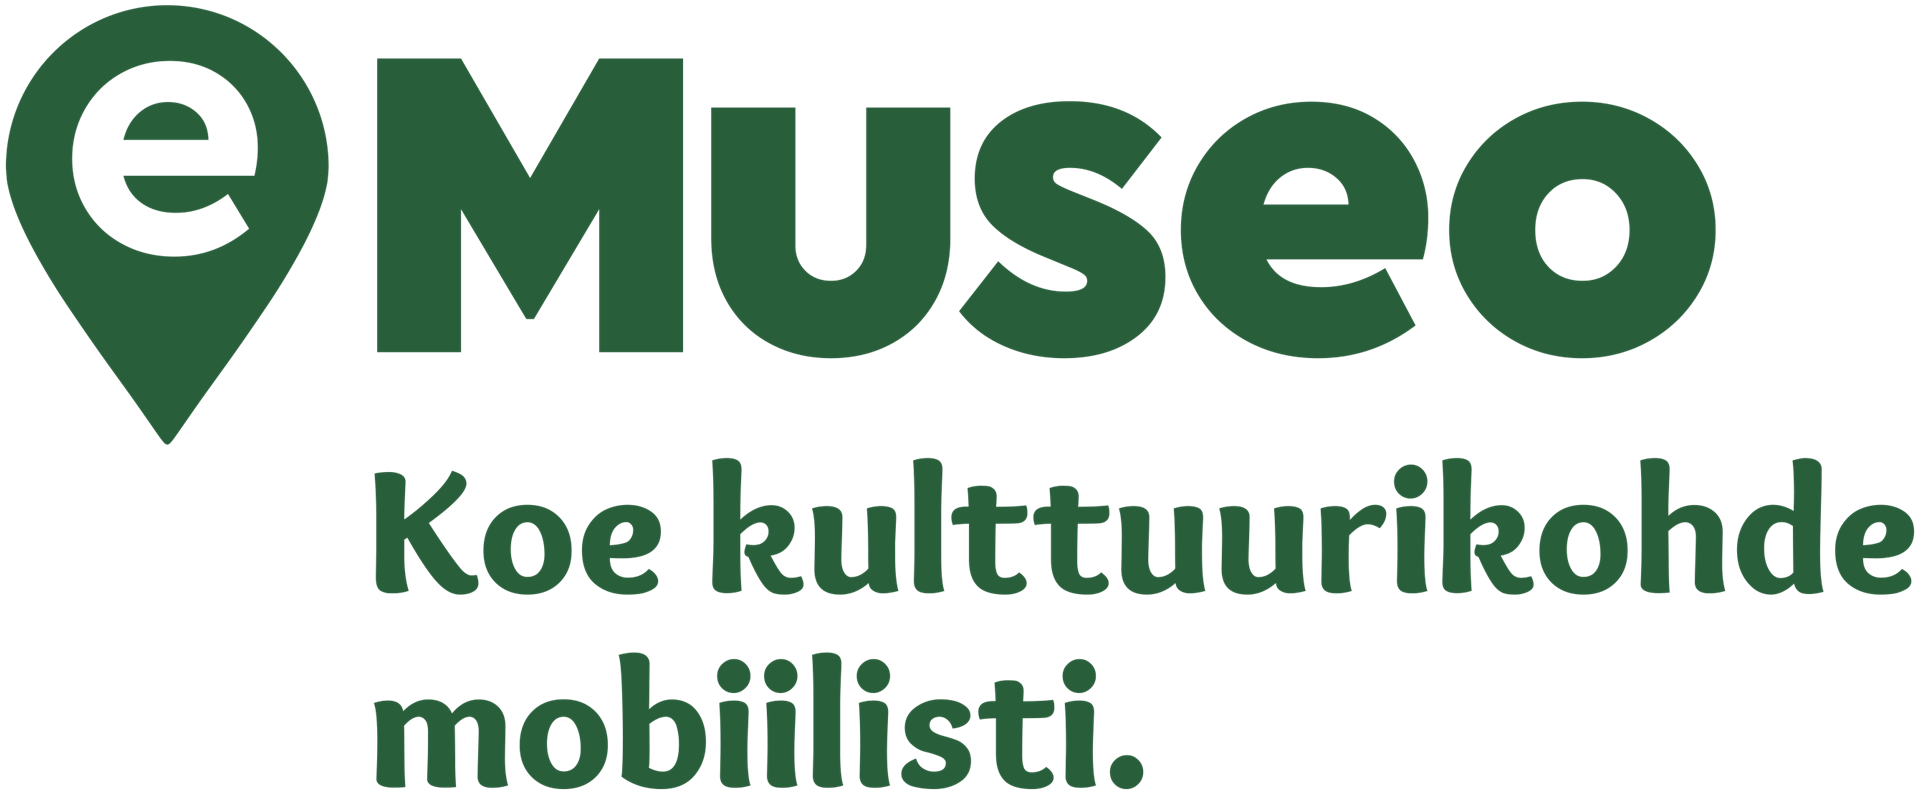 eMuseo_logo-teksti_vihr.png